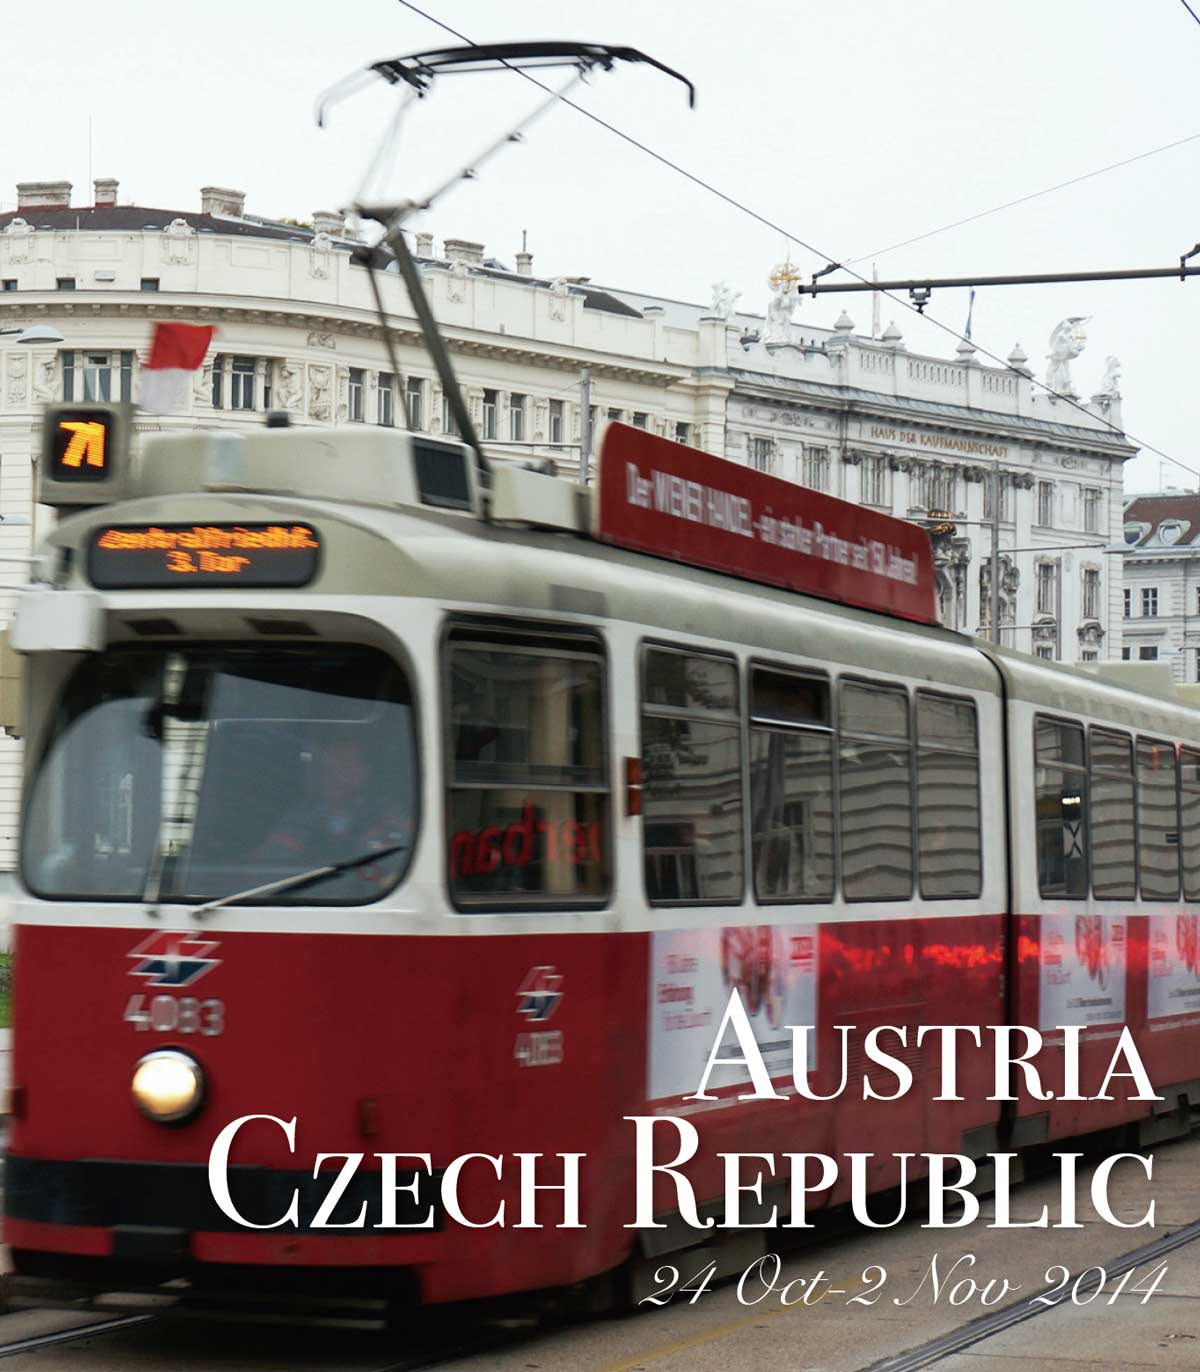 Austria Czech Republic 24 Oct - 2 Nov 2014